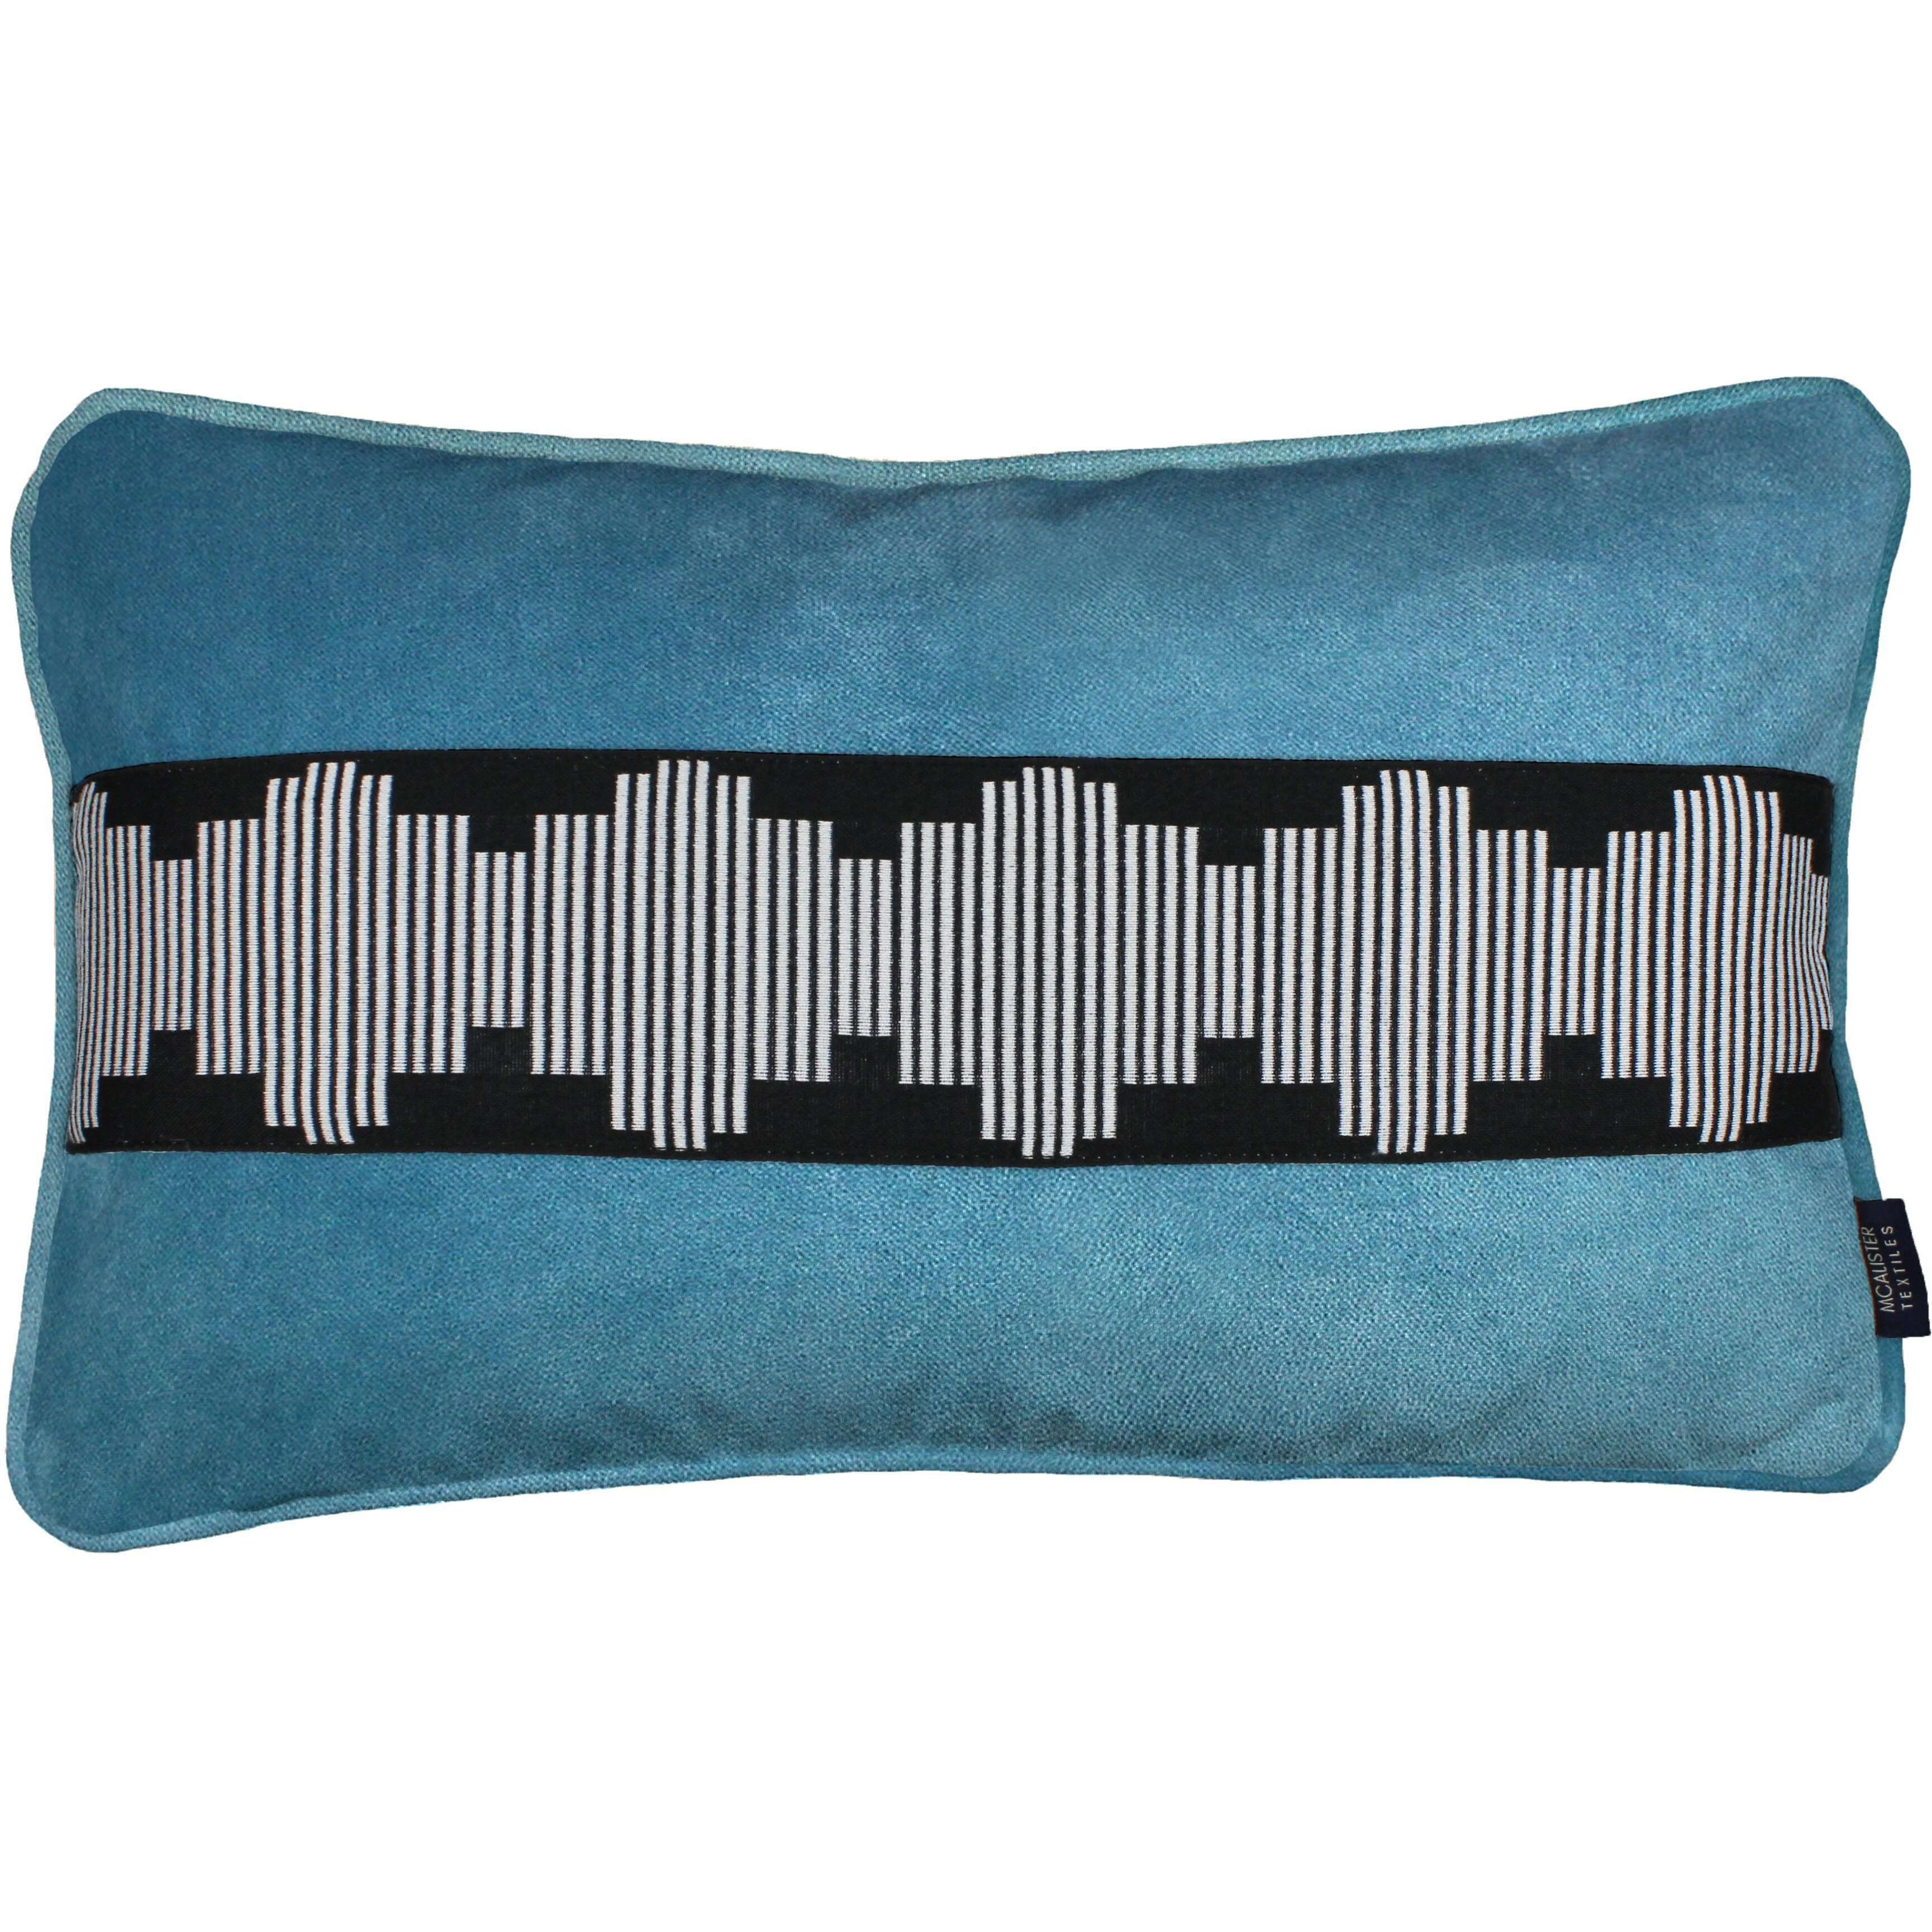 McAlister Textiles Maya Striped Duck Egg Blue Velvet Pillow Pillow Cover Only 50cm x 30cm 